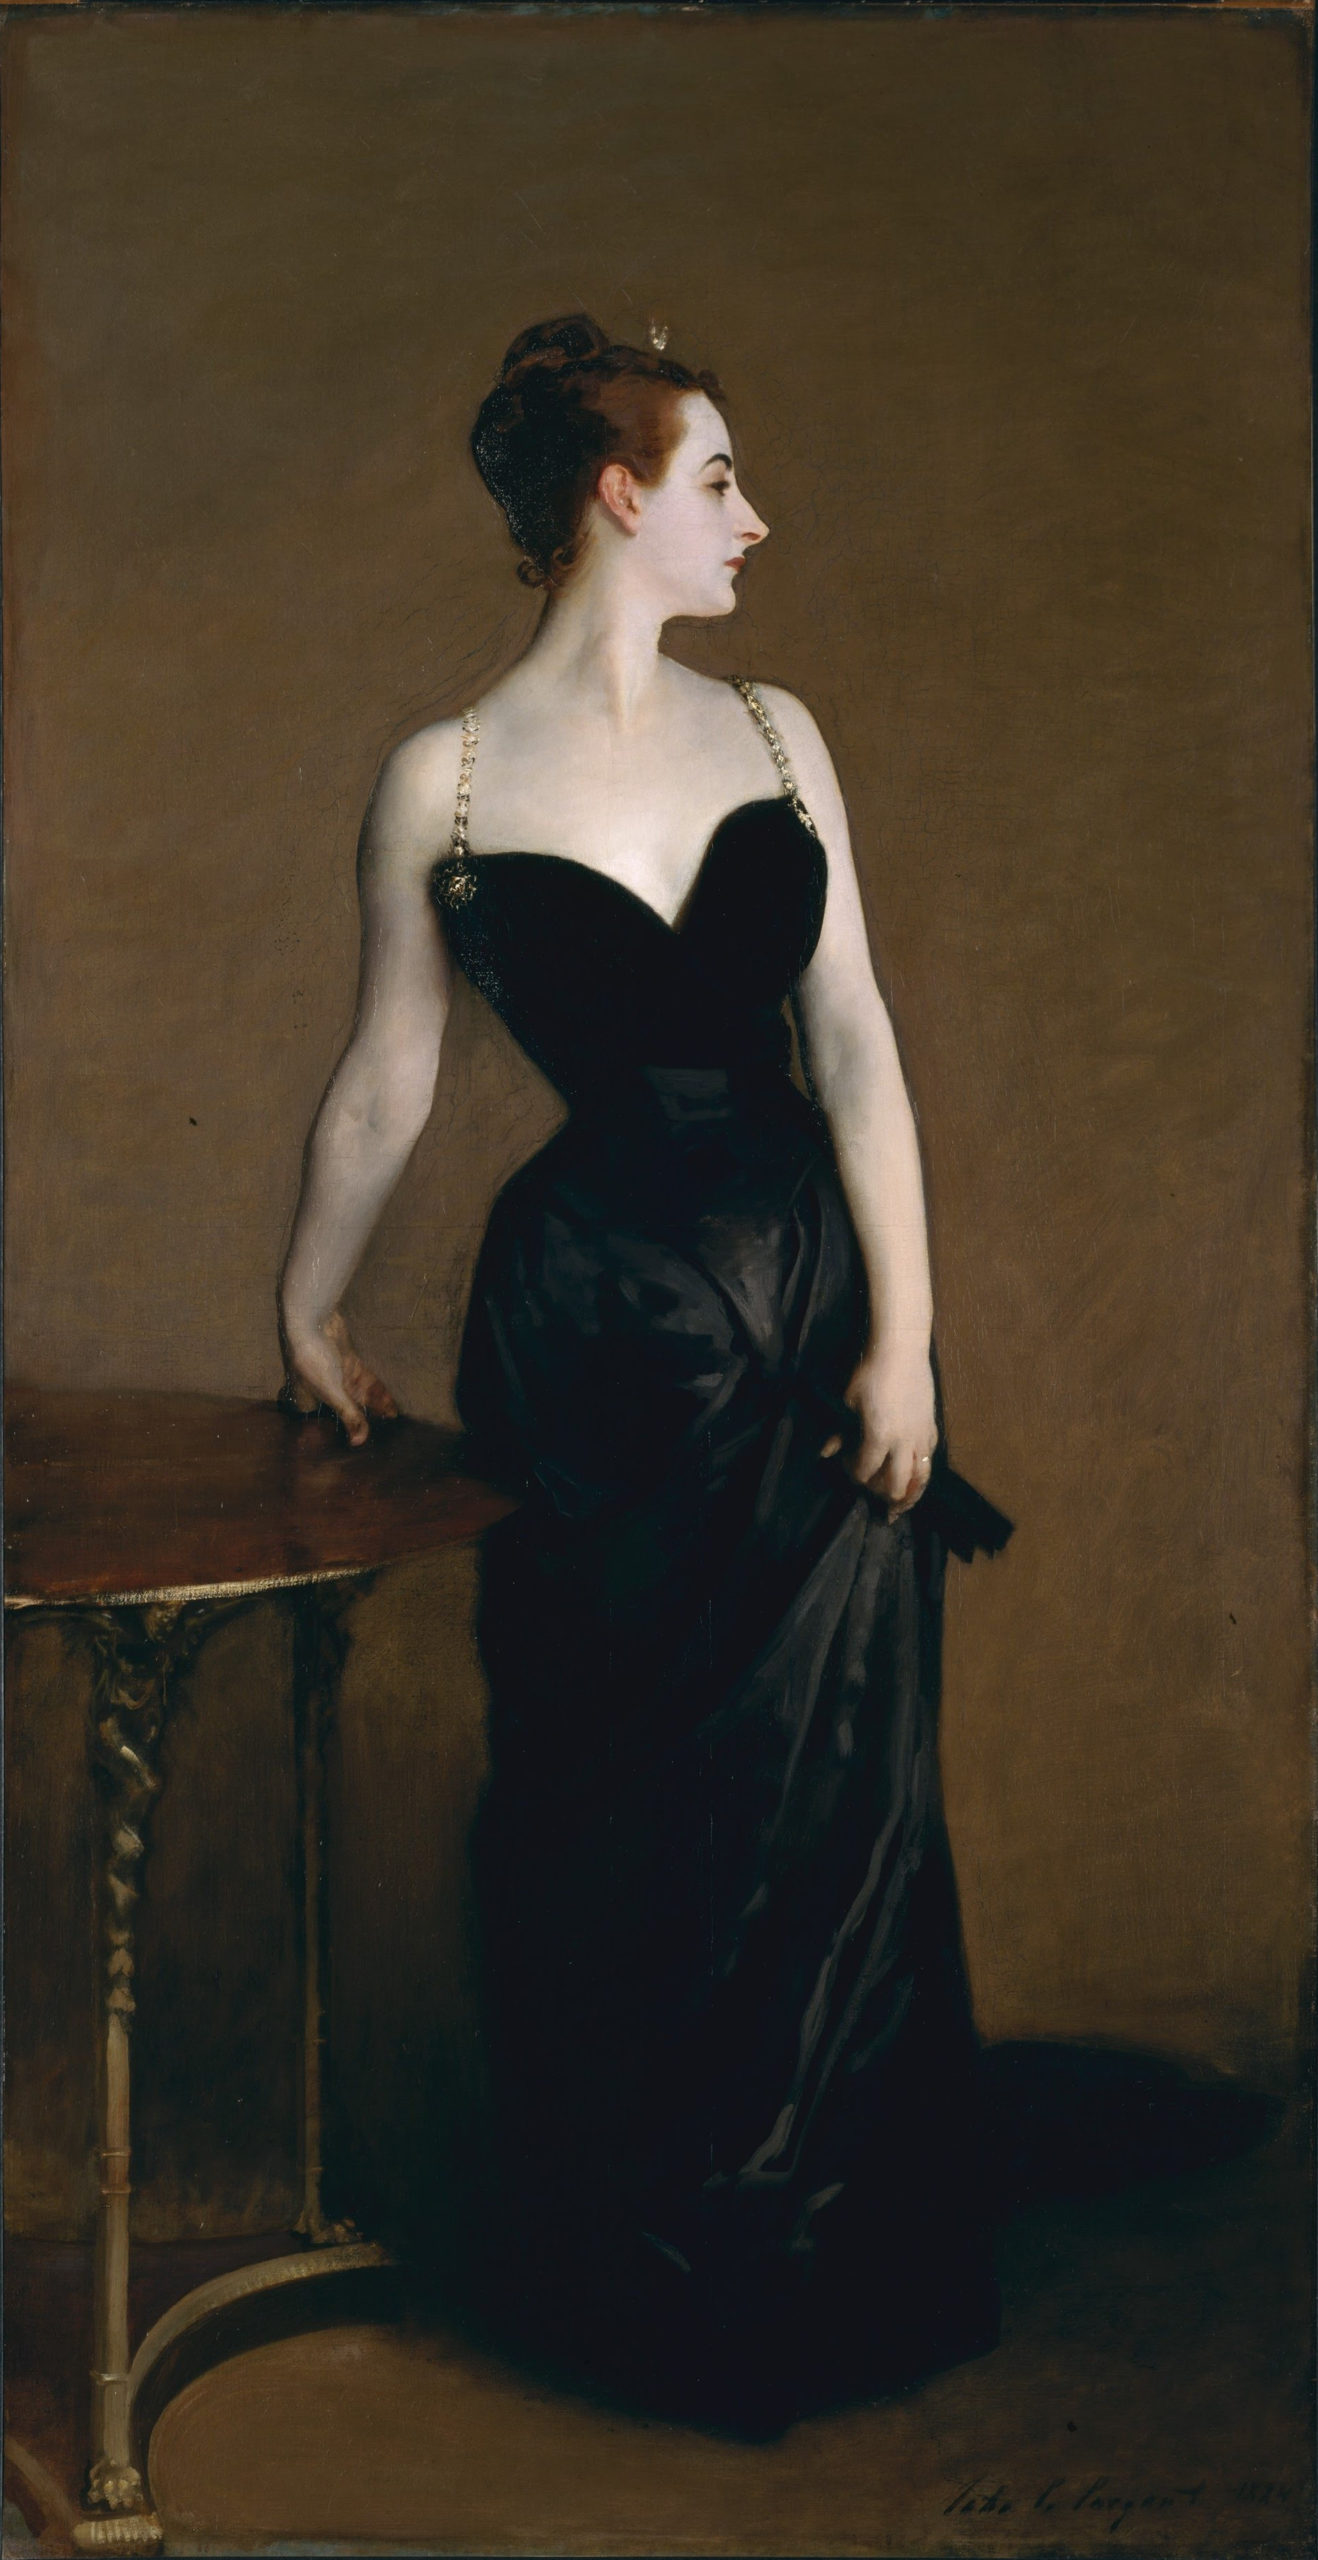 John Singer Sargent, Madame X (Madame Pierre Gautreau), 1883-84, oil on canvas, 82-1/8 x 43-1/4 inches (The Metropolitan Museum of Art)